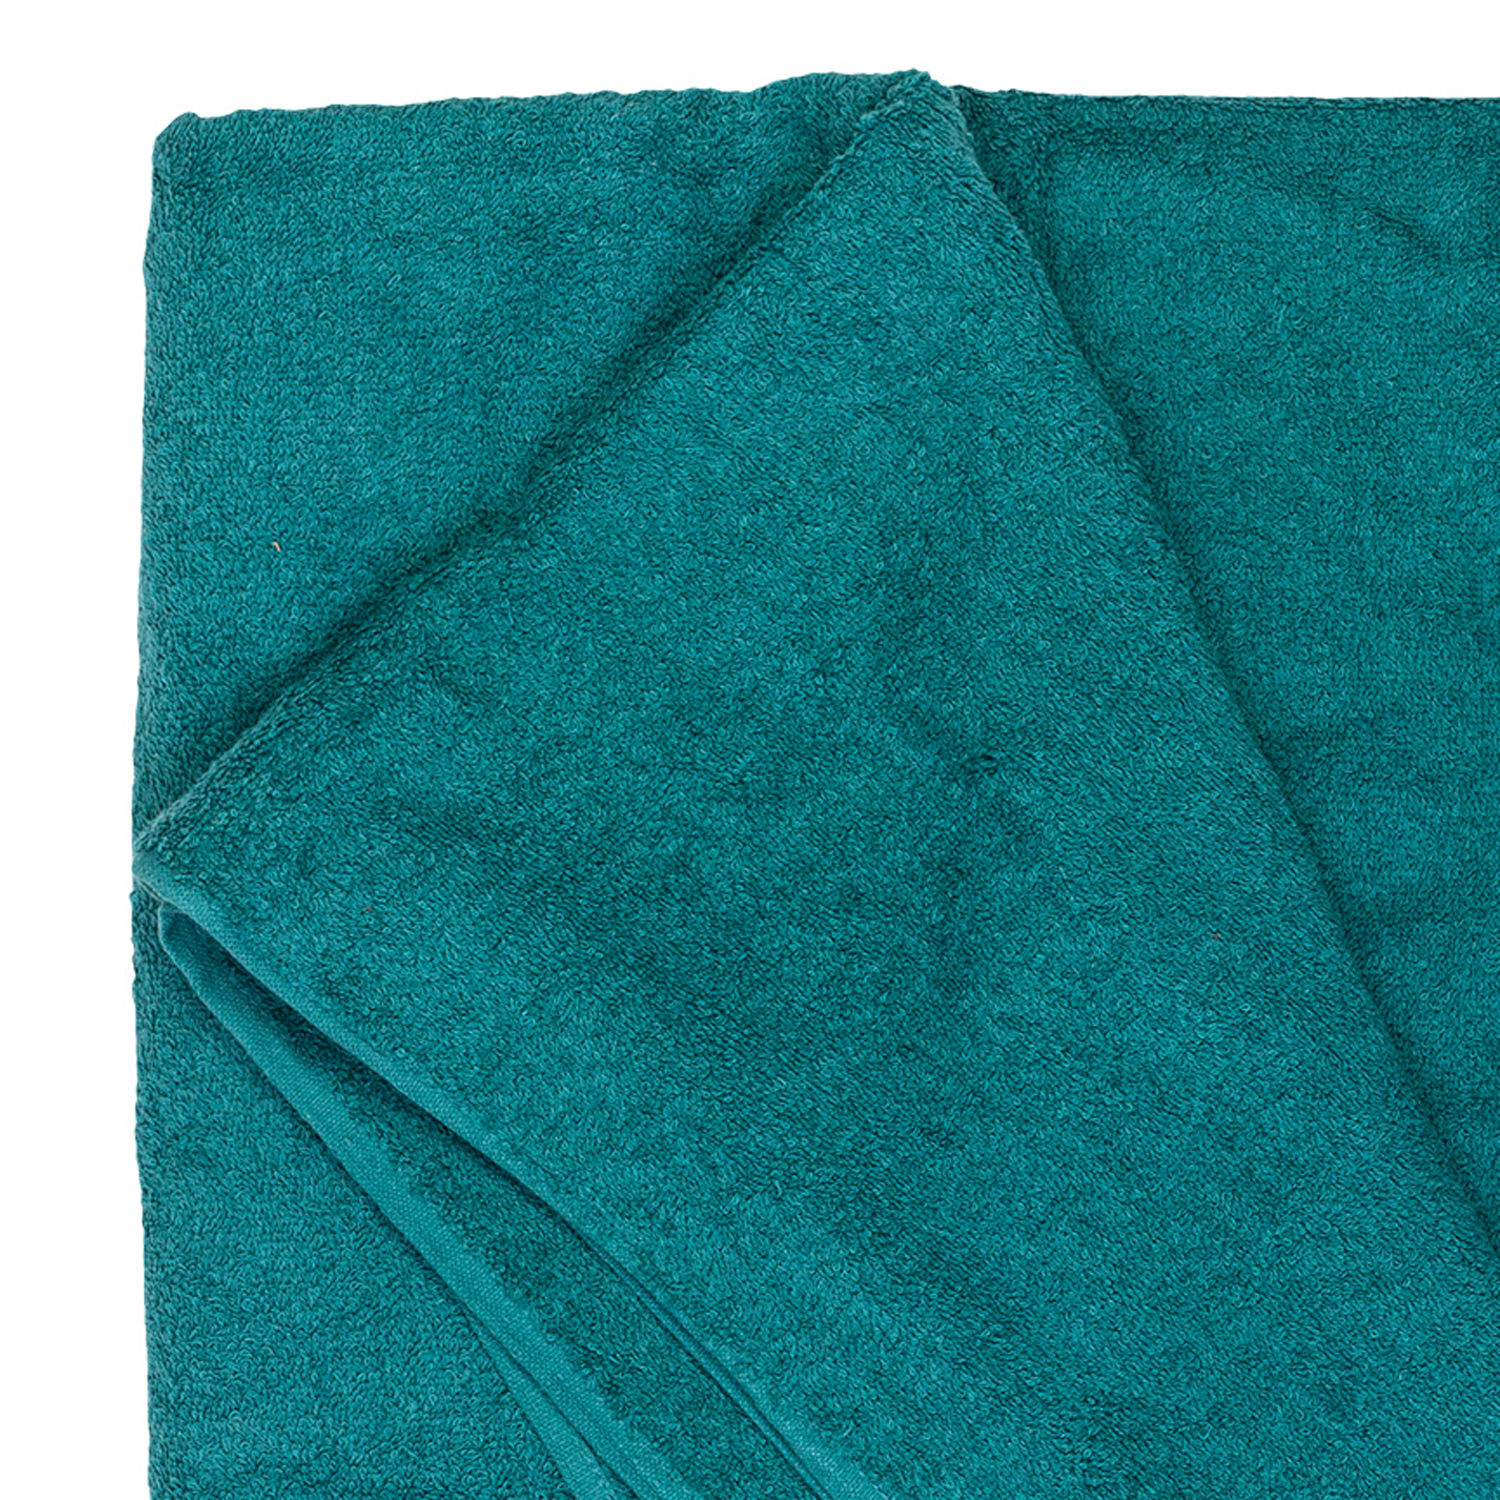 Bath towel series Helsinki in petrol by Adamo in large sizes 100x220 cm or 155x220 cm